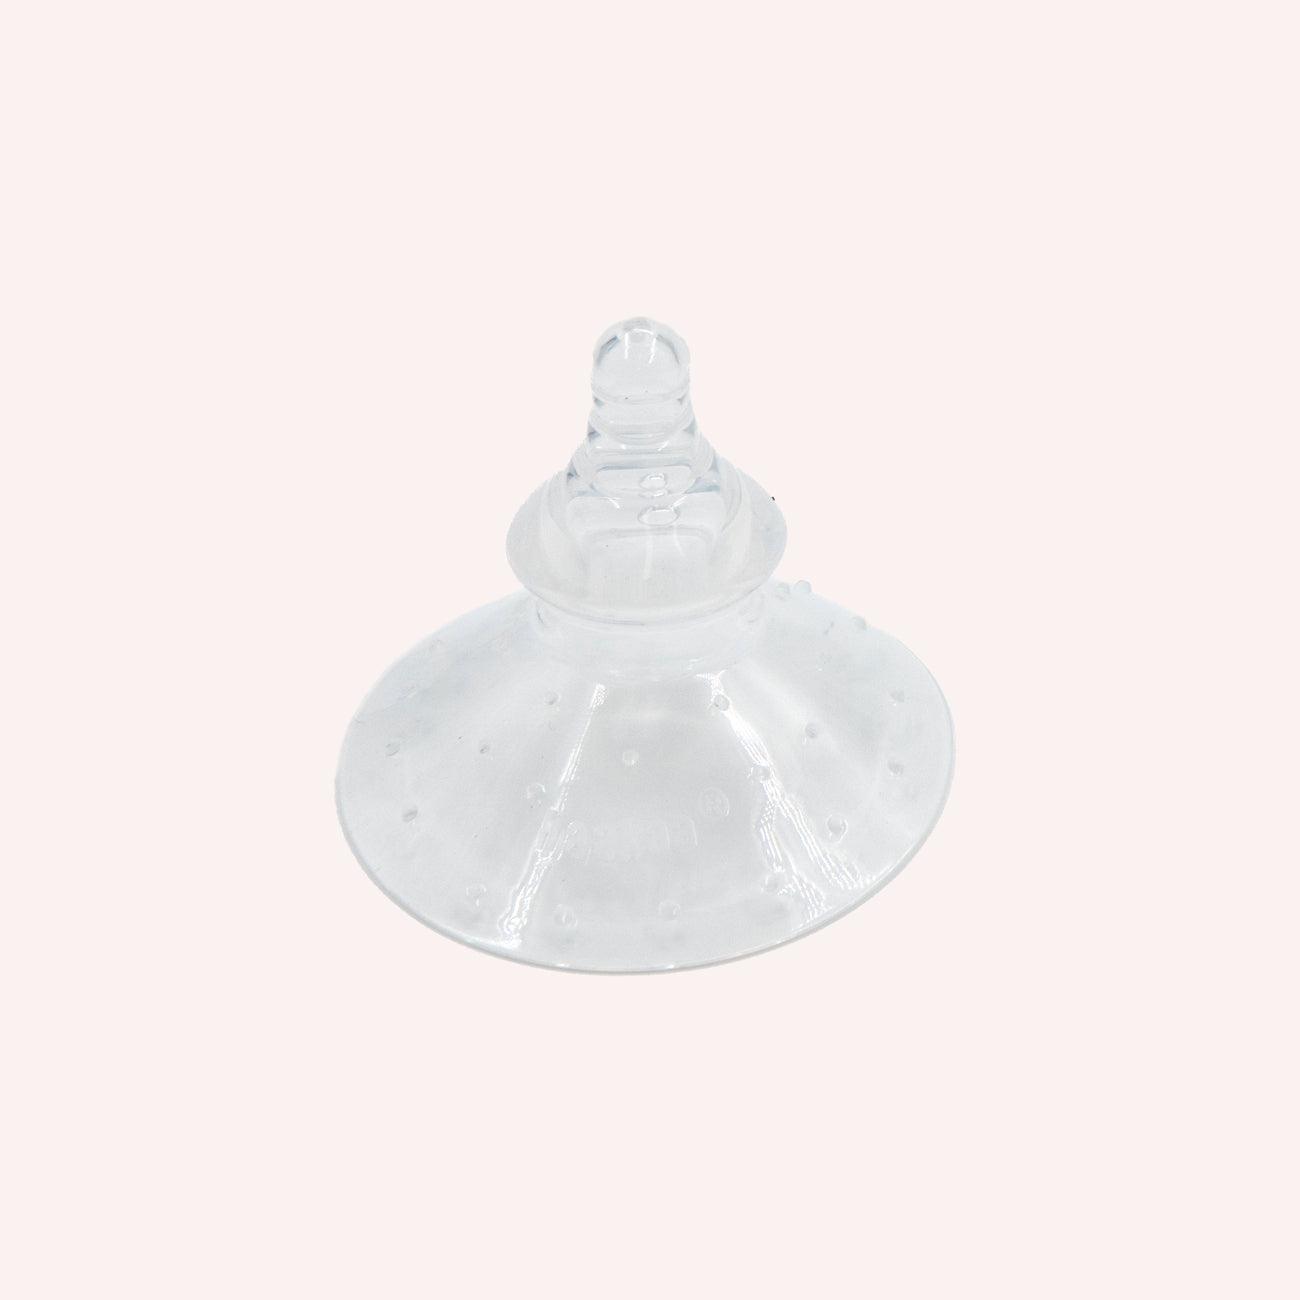 Breastfeeding Nipple Shield - Round